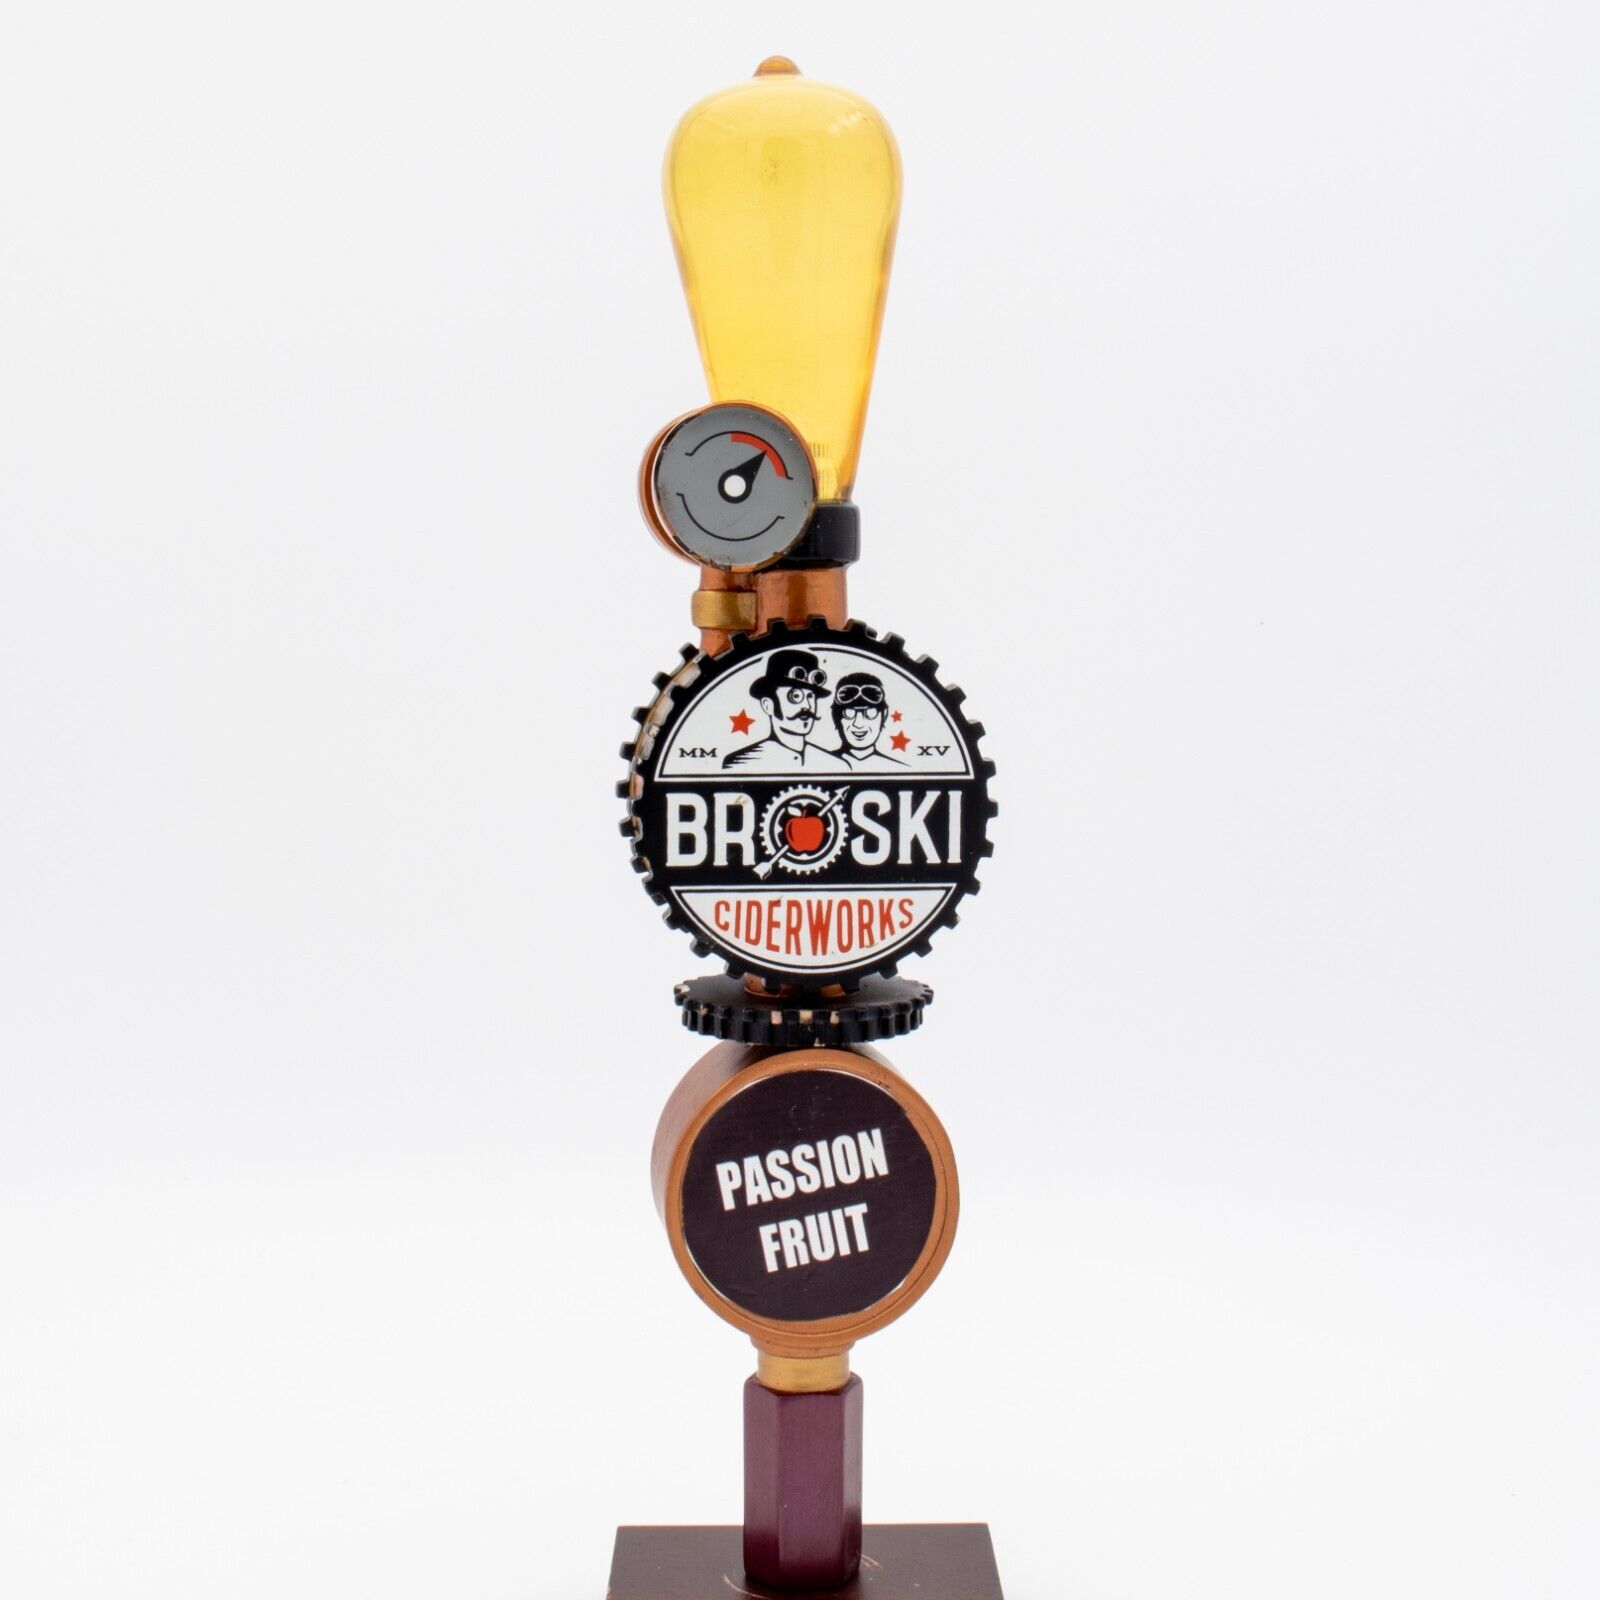 Broski Ciderworks Steampunk Cogs Beer Tap Handle Rare